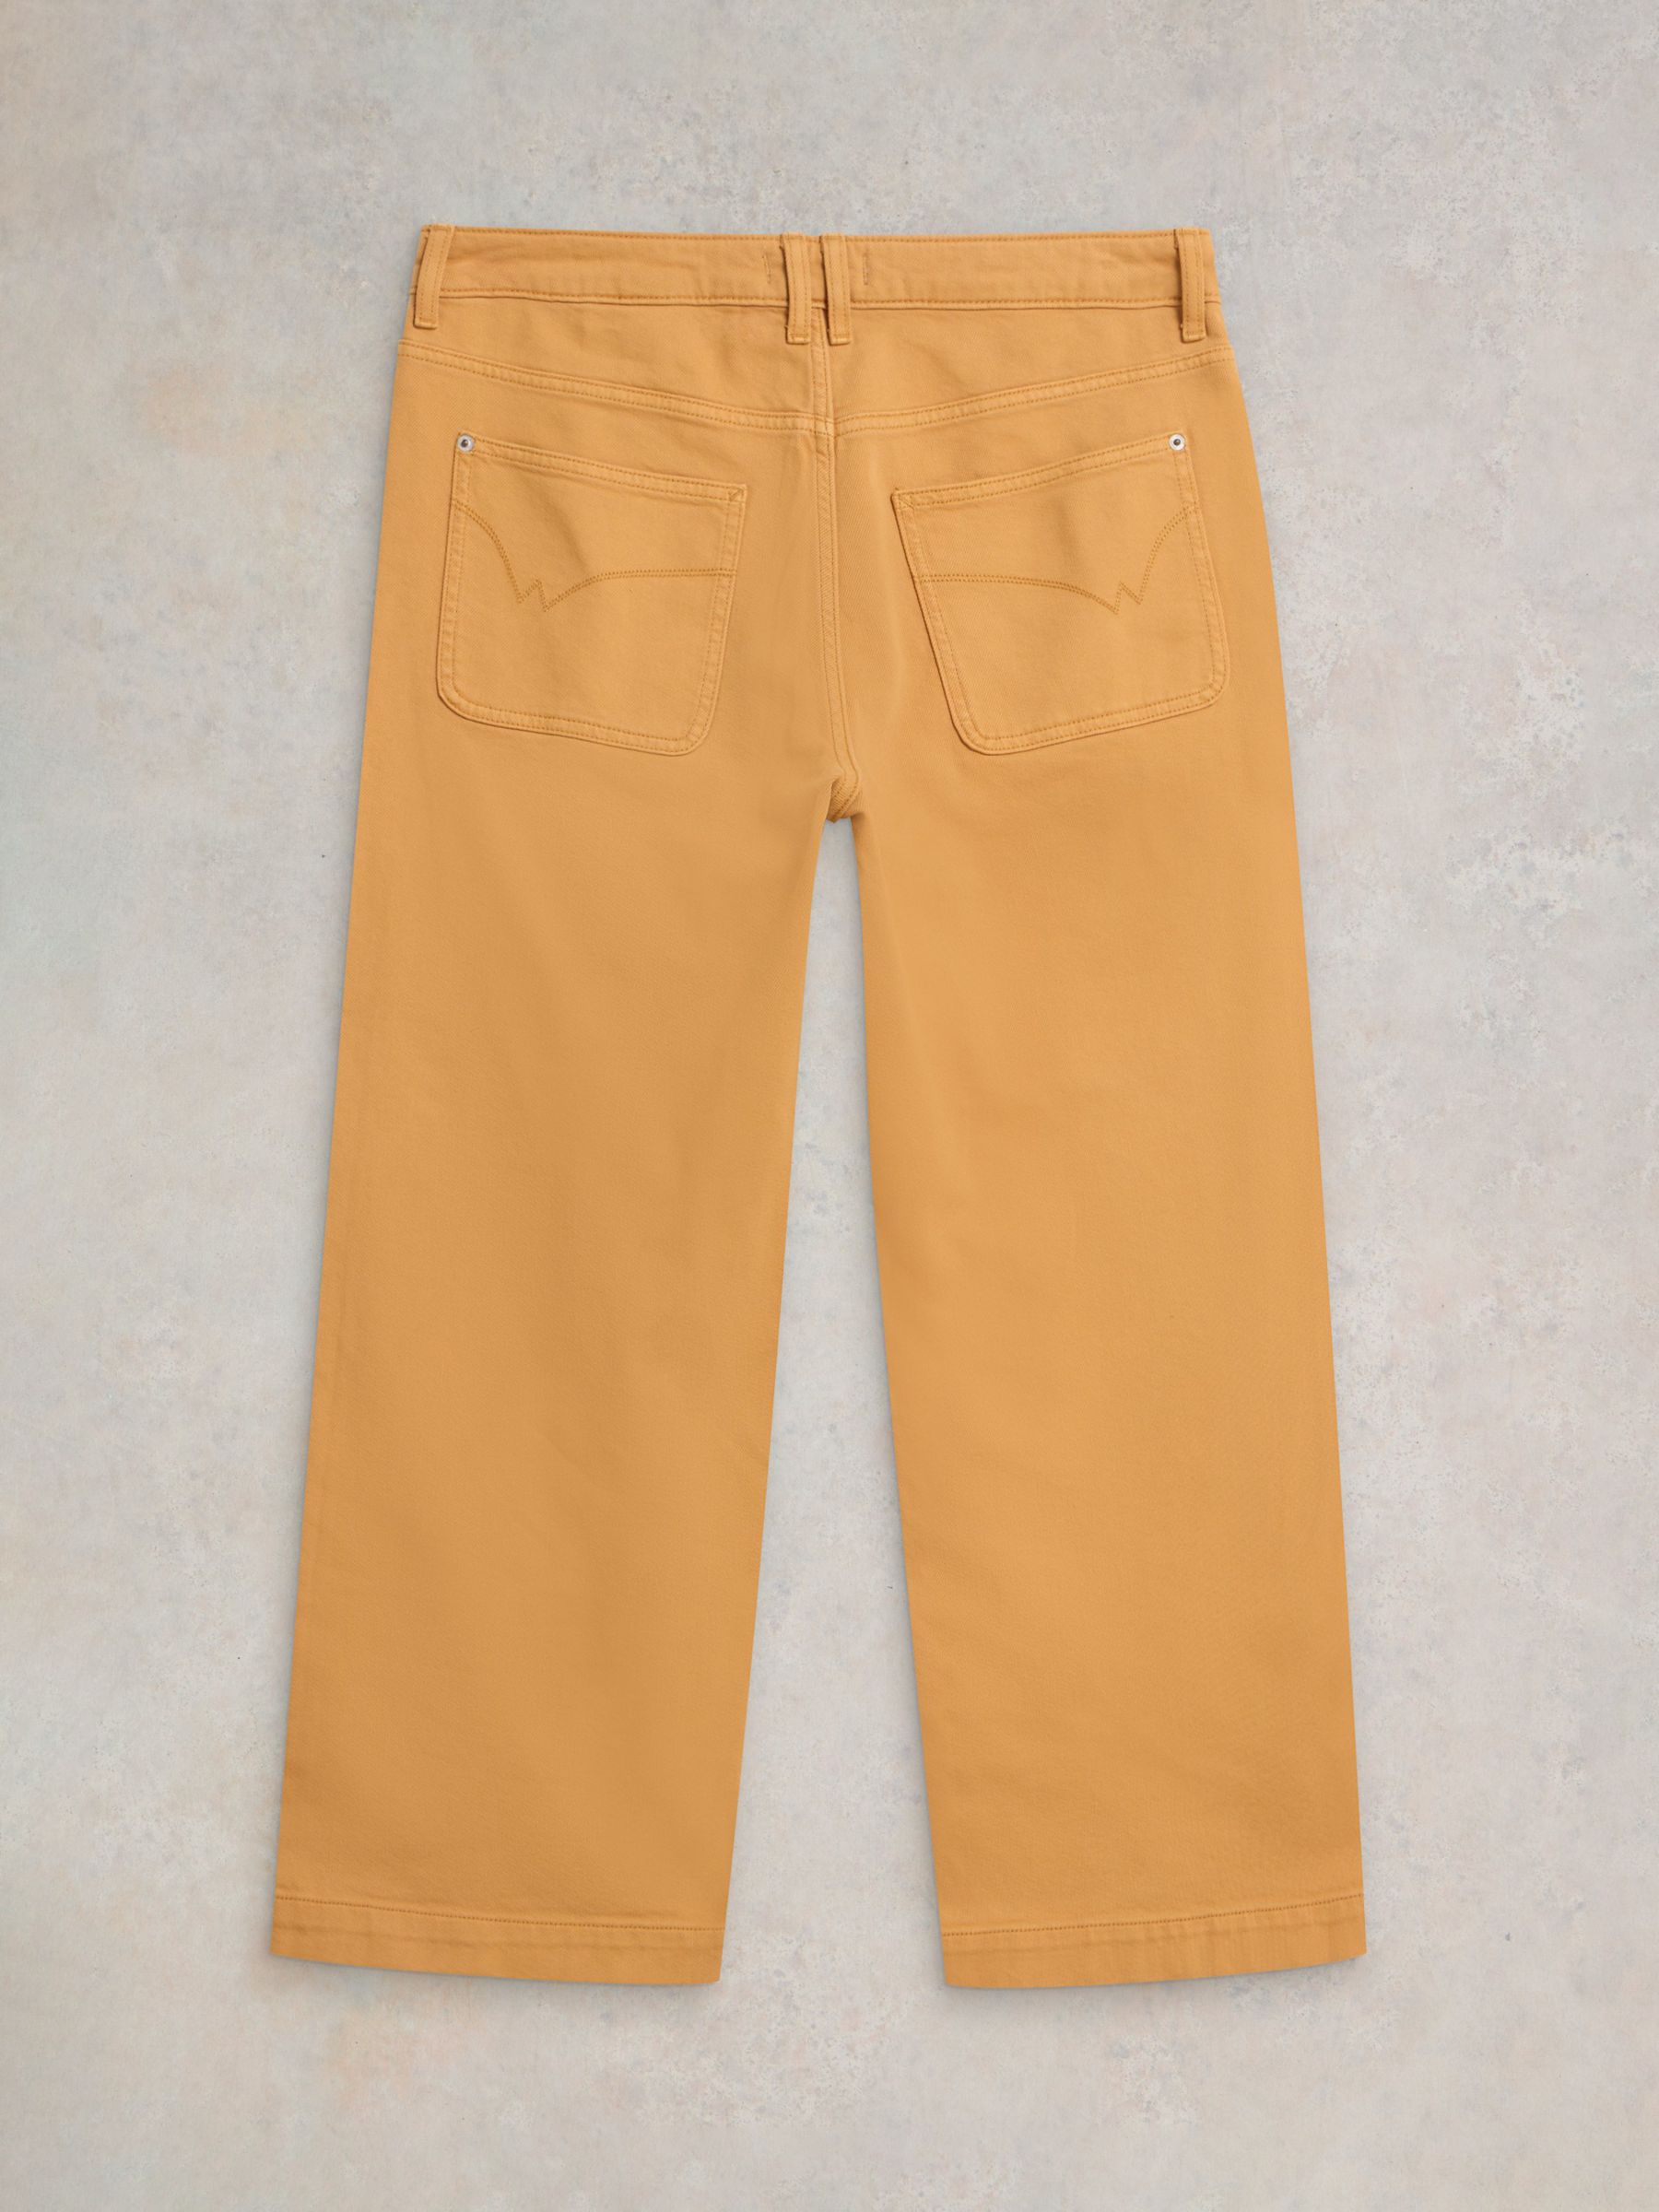 White Stuff Tia Wide Leg Cropped Jeans, Mid Yellow, 6